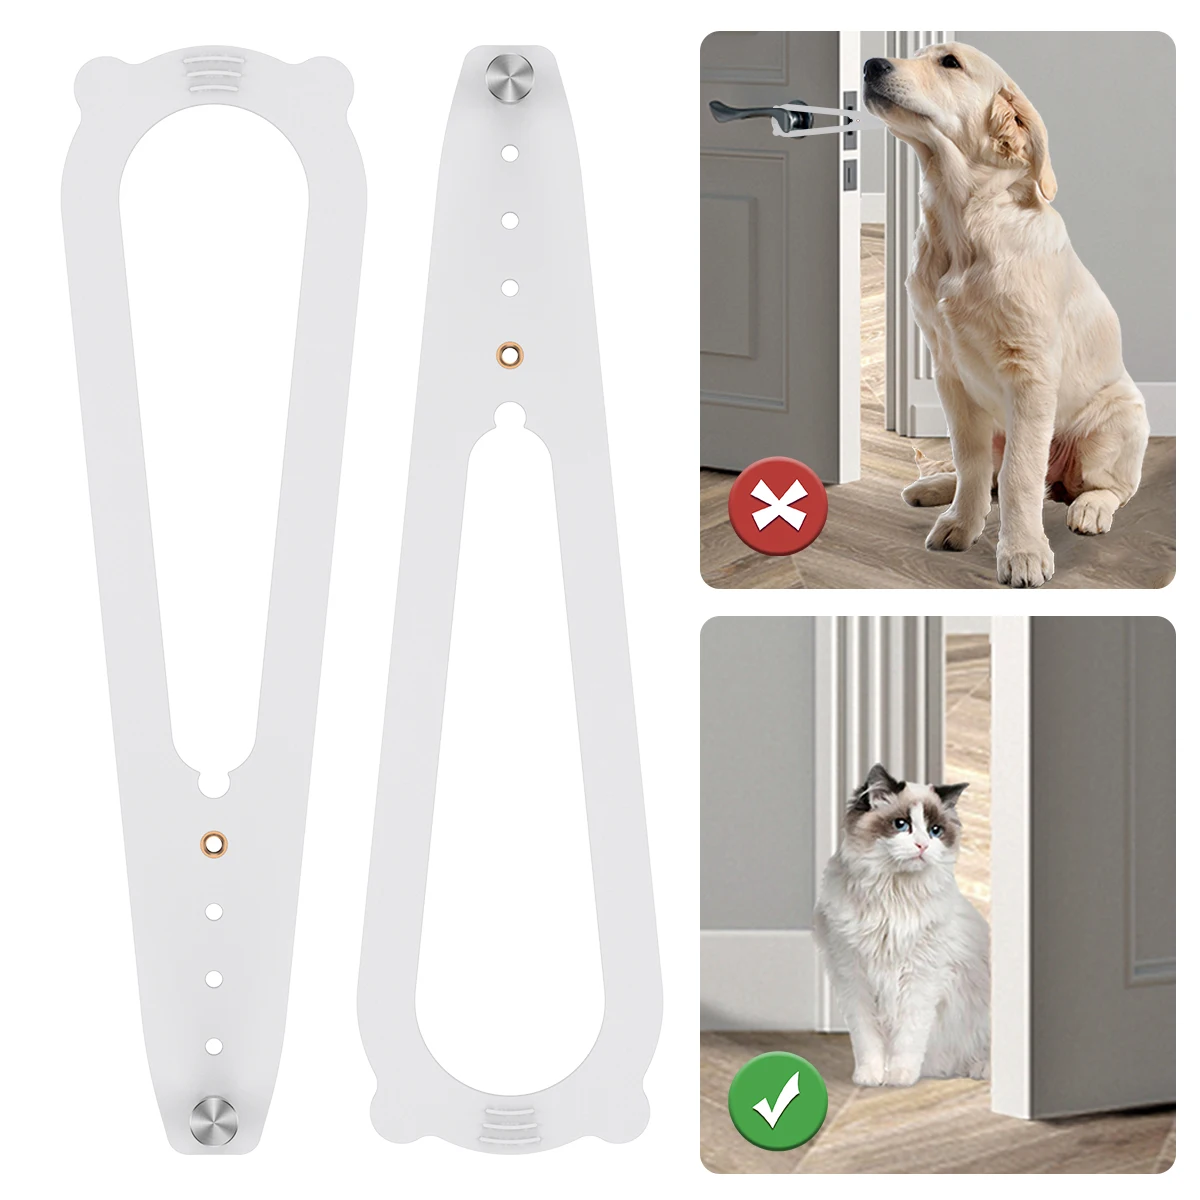 2PCS Cat Door Holder Latch Safe Plastic Dog Proof Door Stopper Door Lock Strap for Keeping Dogs Kids Out Pets Supply